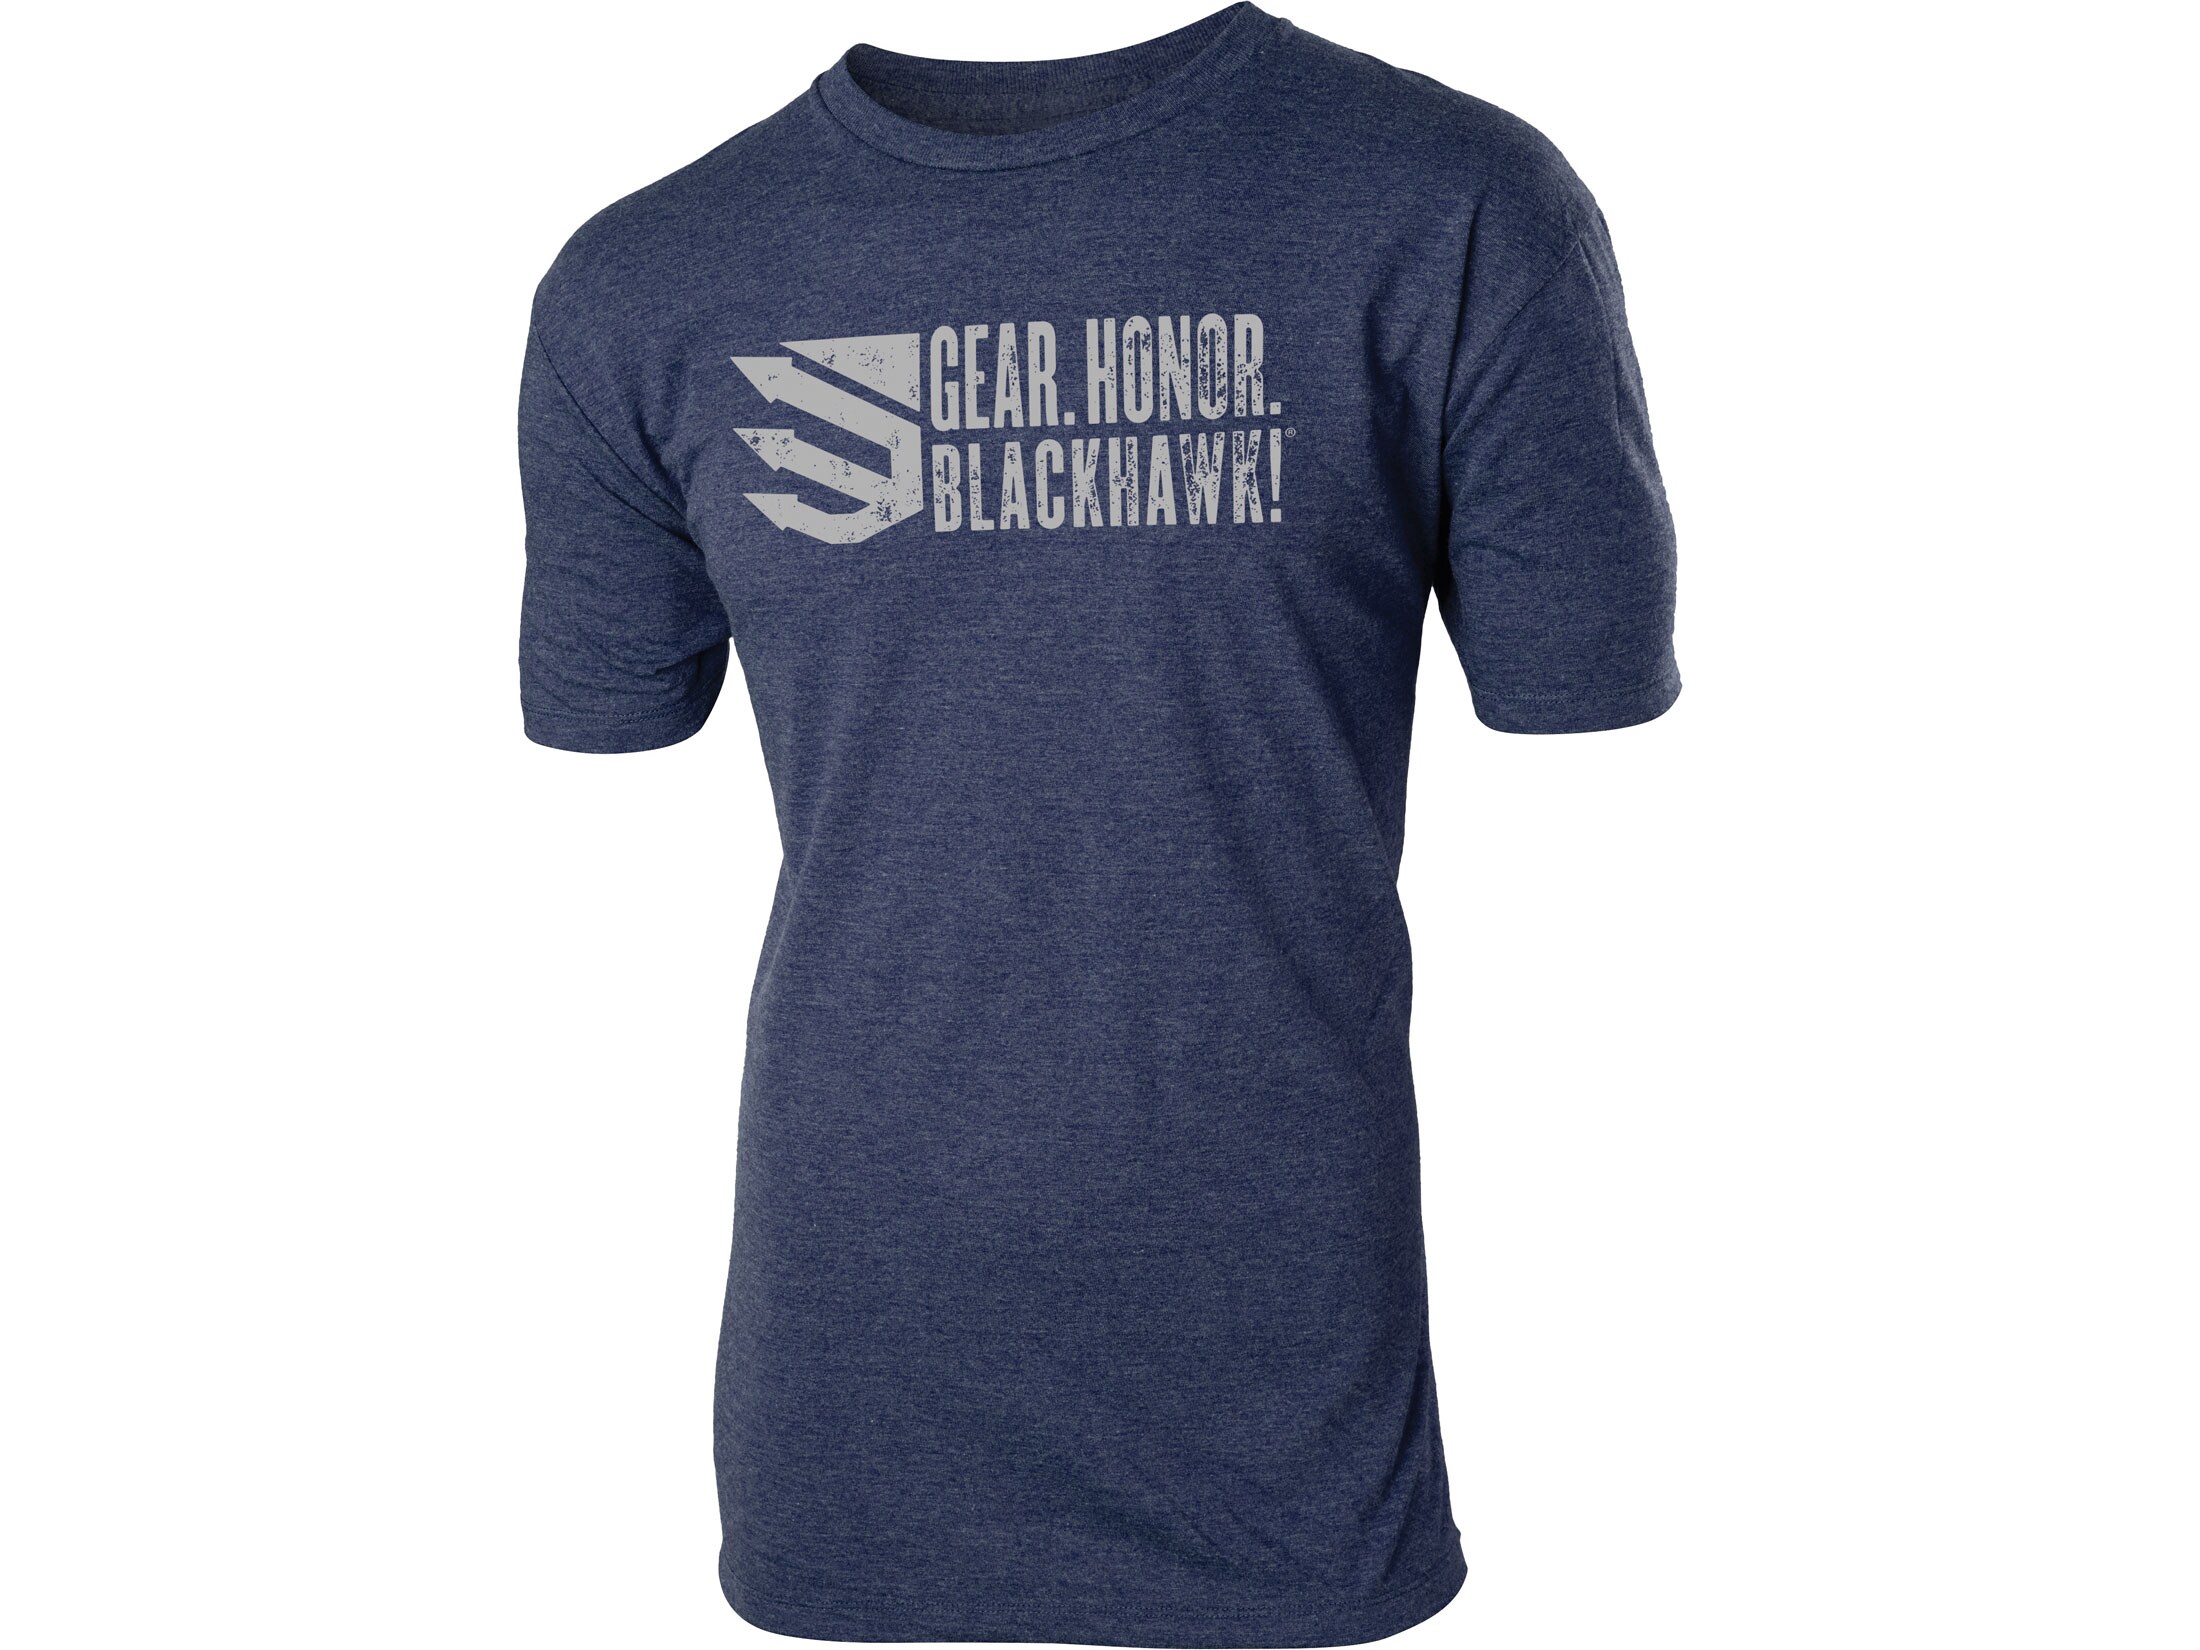 BLACKHAWK! Men's Gear. Honor. T-Shirt Short Sleeve Cotton/Poly